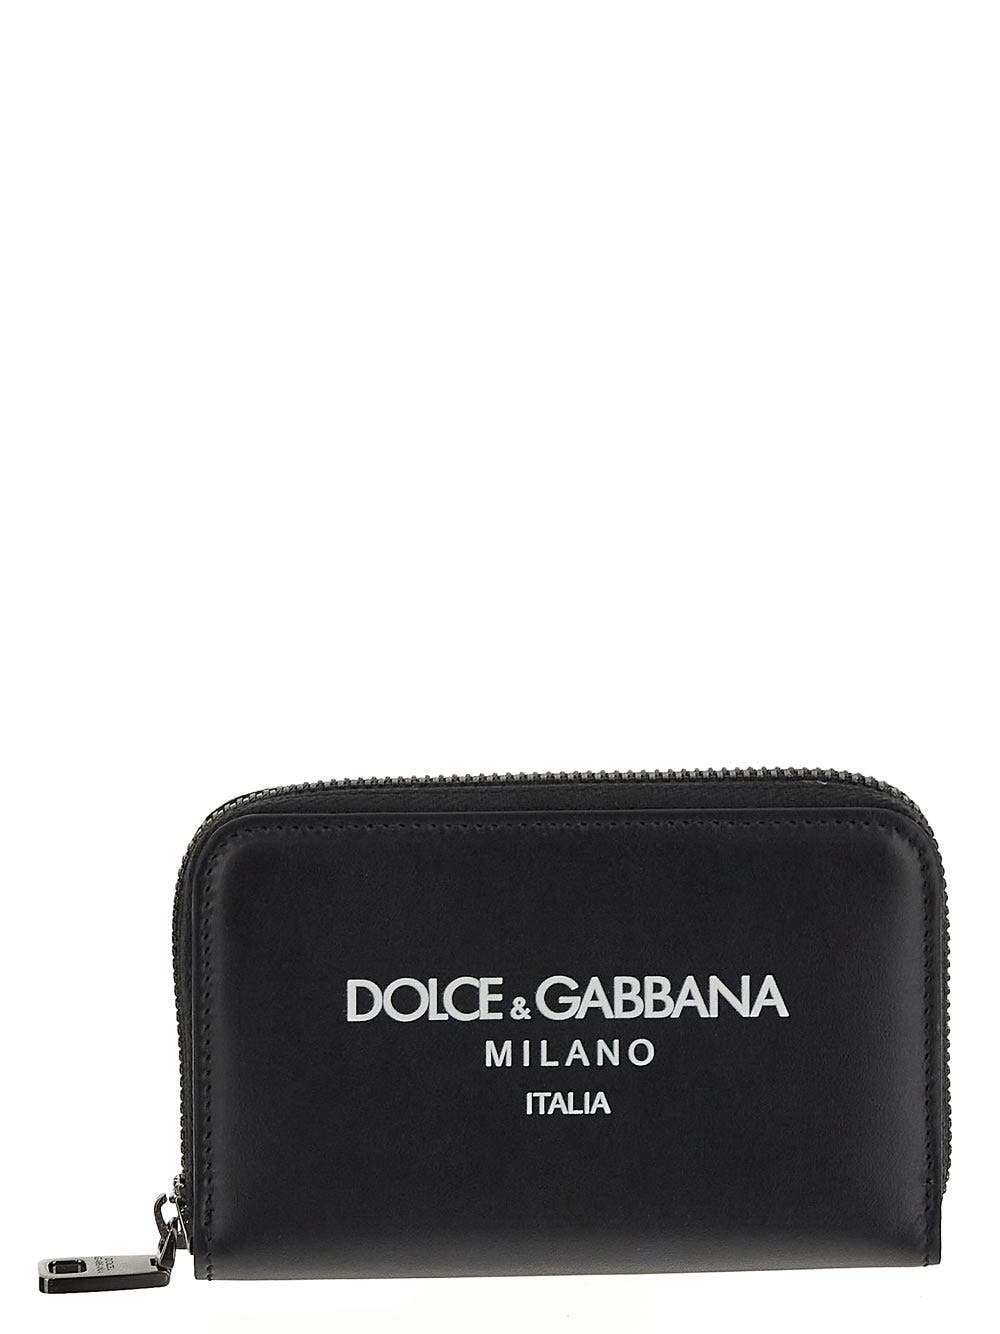 Photo: Dolce & Gabbana Logoed Wallet